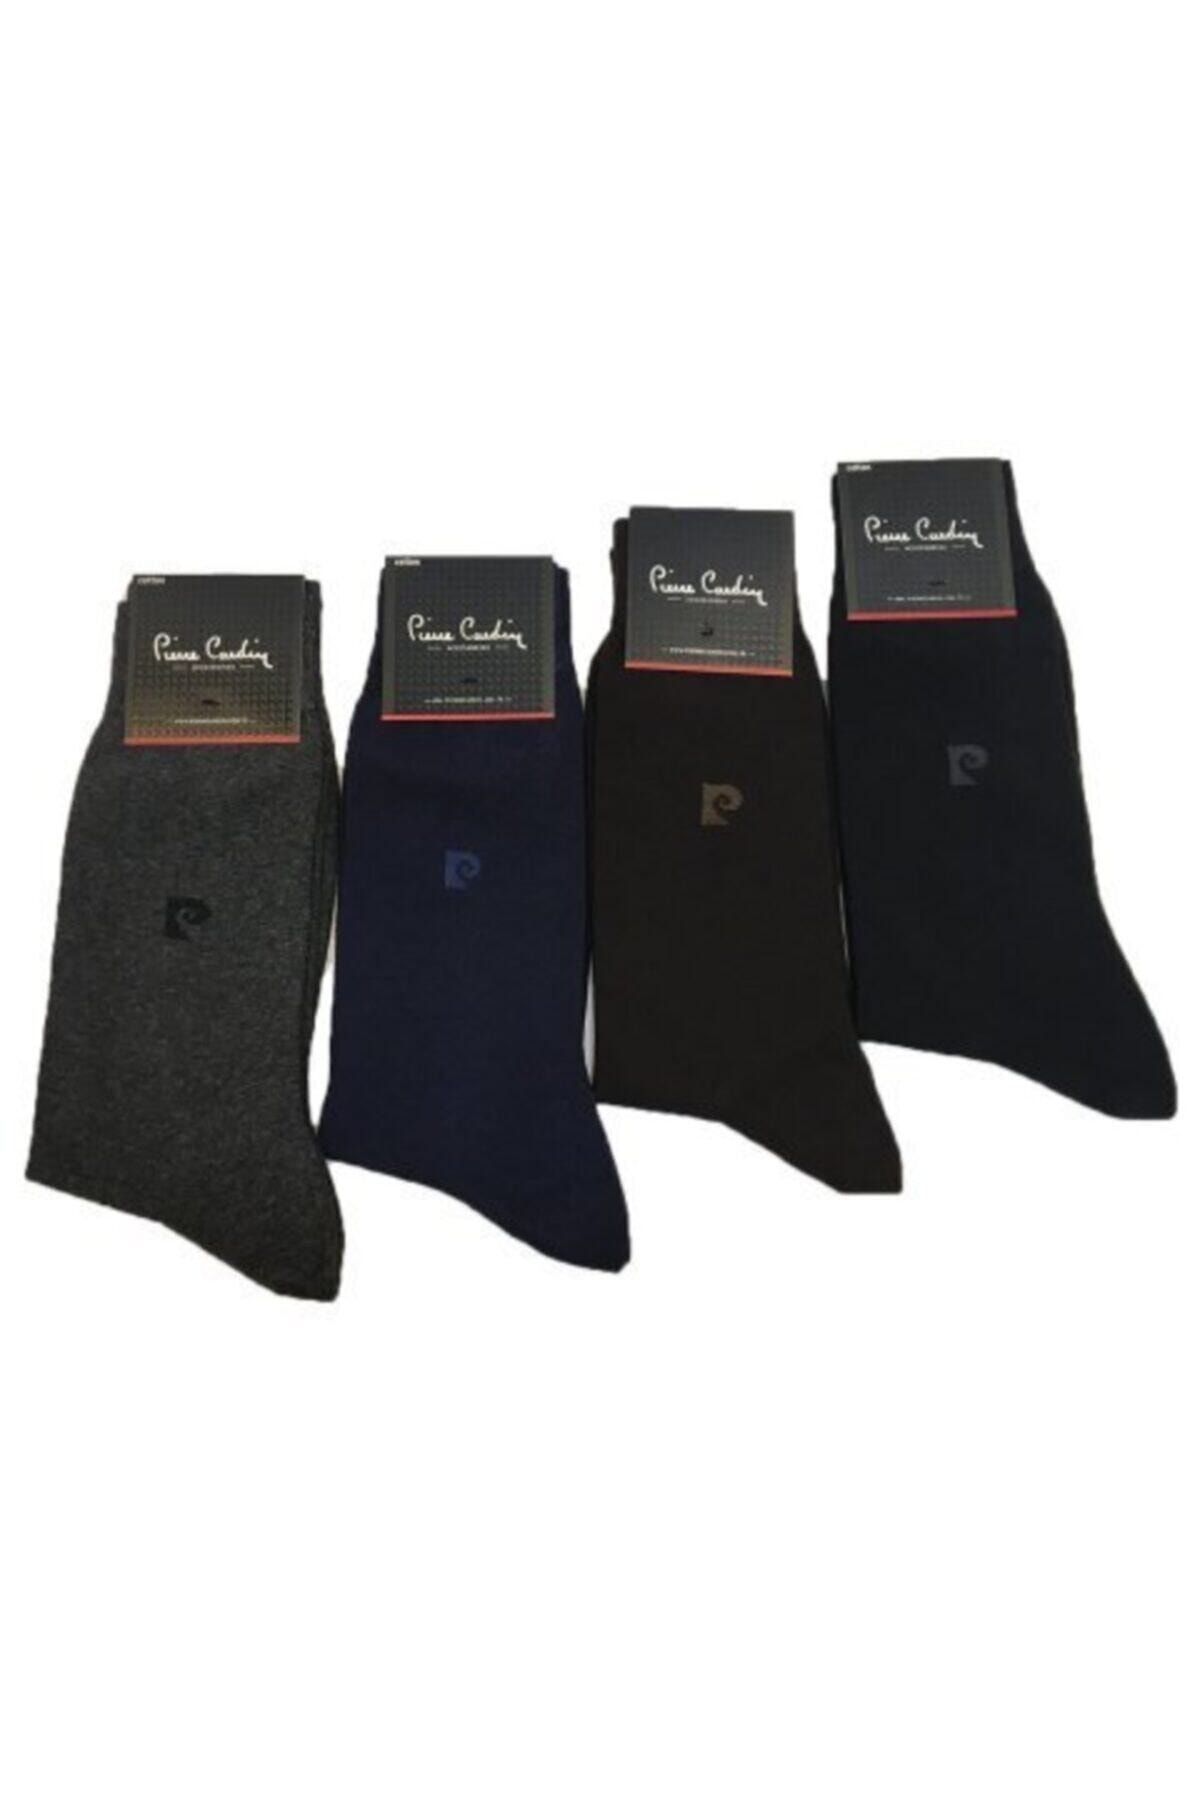 Pierre Cardin 6'lı Paket Erkek Pamuk Çorap Asorti Paket Topuk Burun Takviyeli